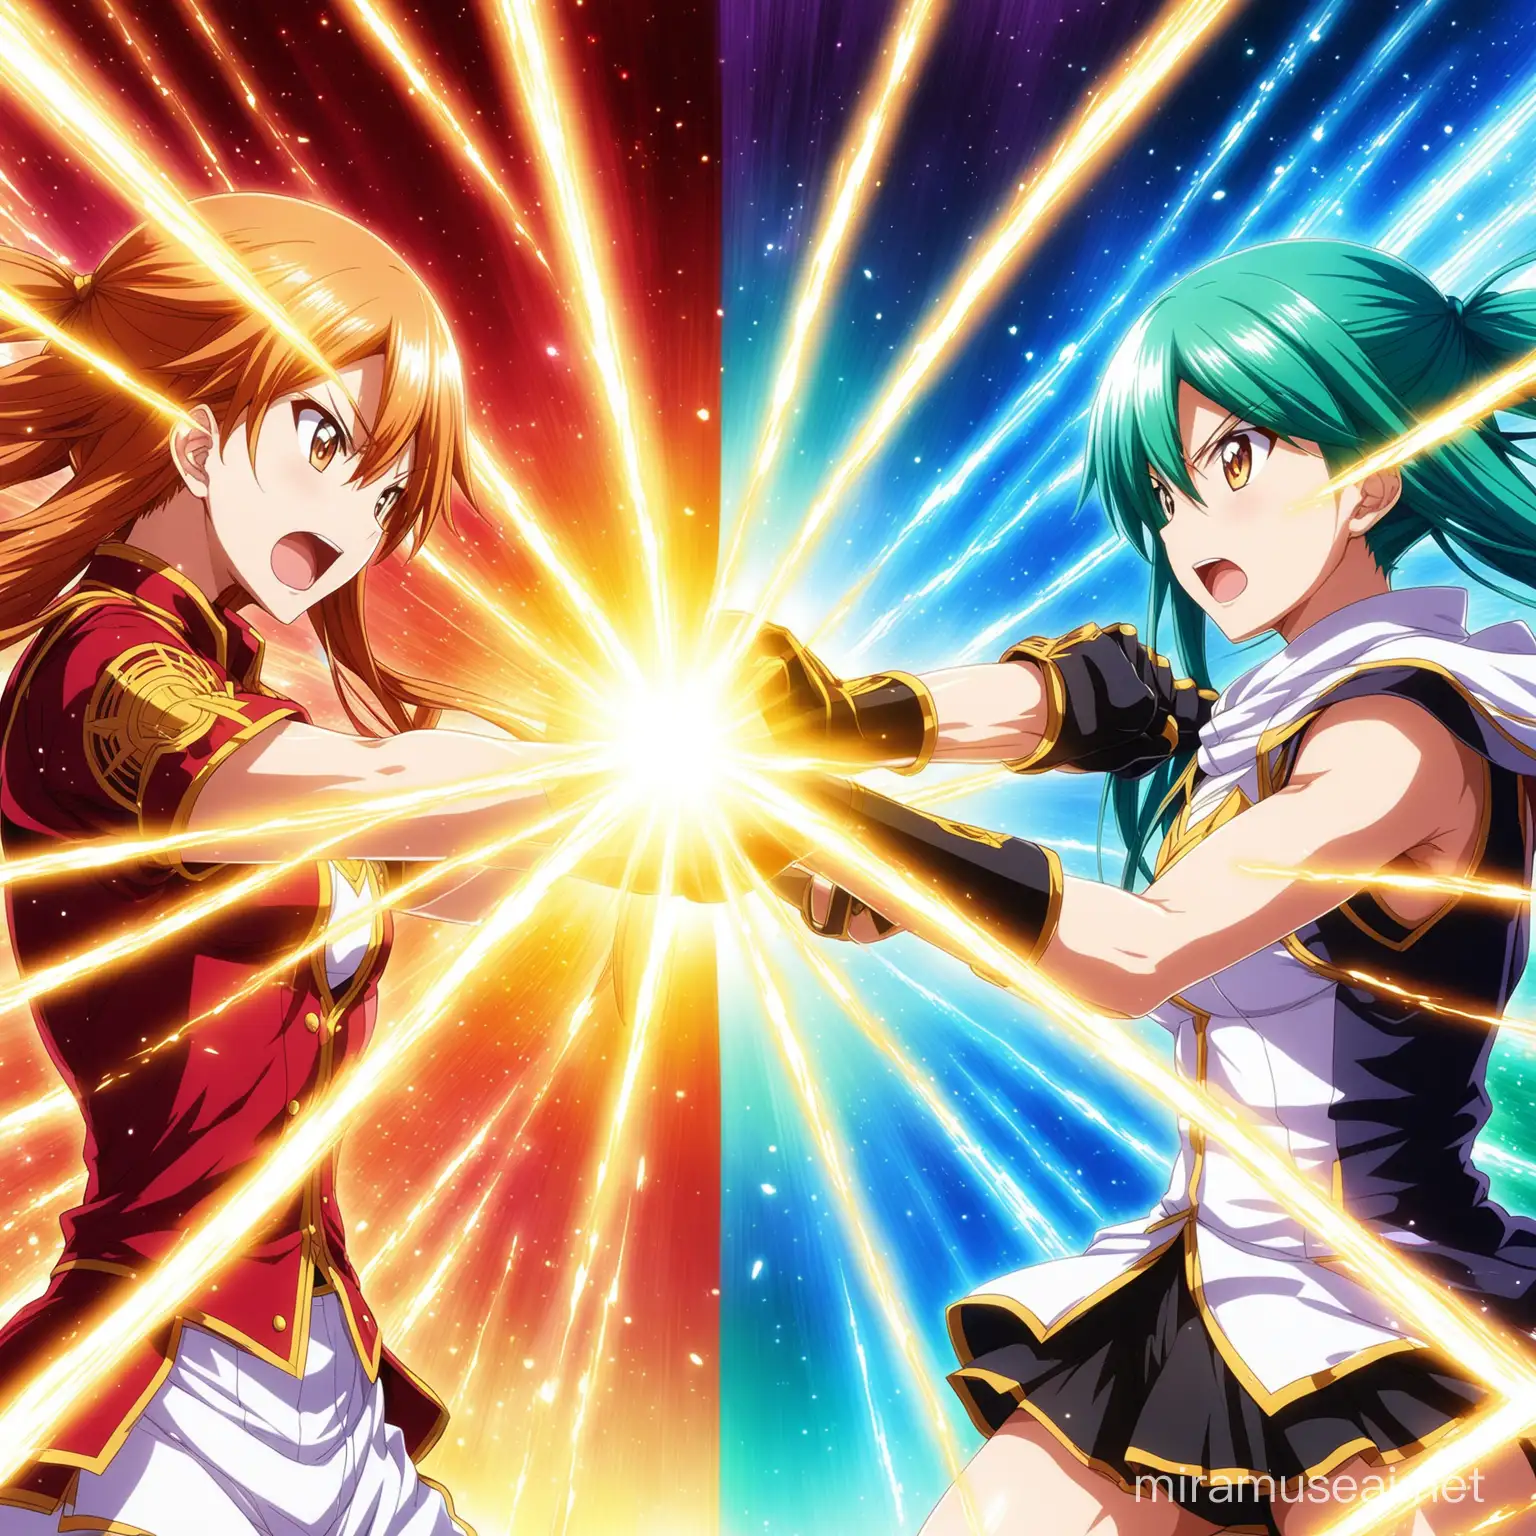 Epic Clash of Elemental Forces Spectacular Magical Battle Anime Scene